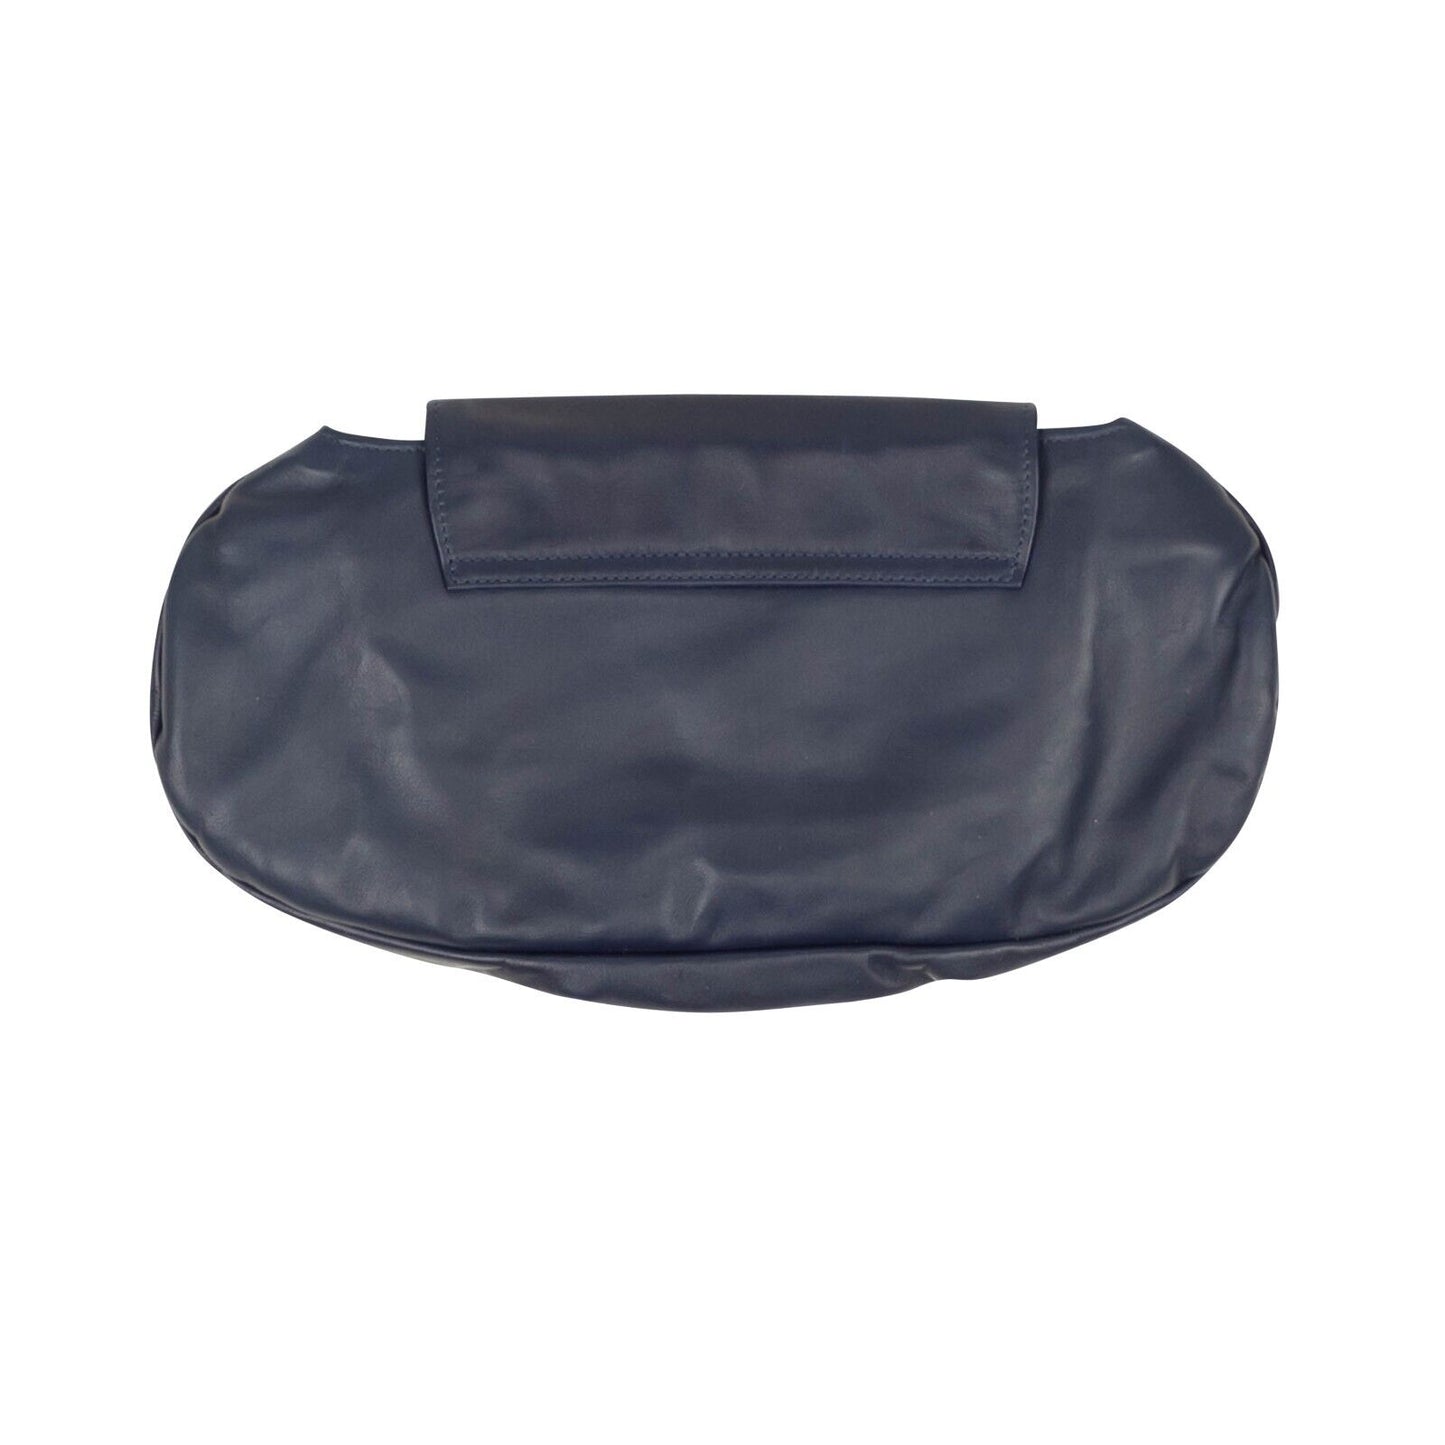 Orciani Leather Clutch Handbag - Navy